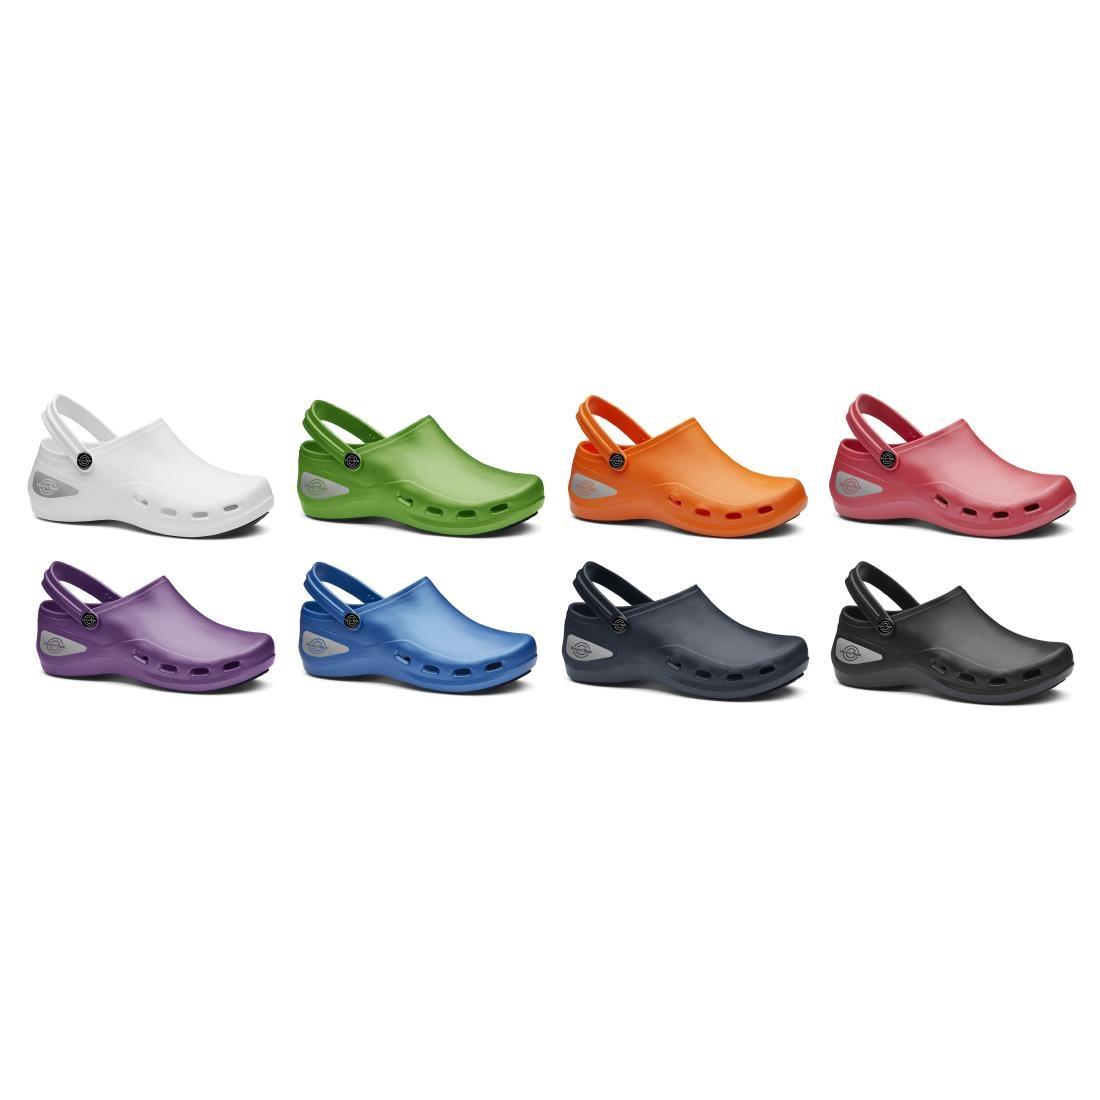 WearerTech Unisex Invigorate White Safety Shoe Size 5 - BB199-38  - 7